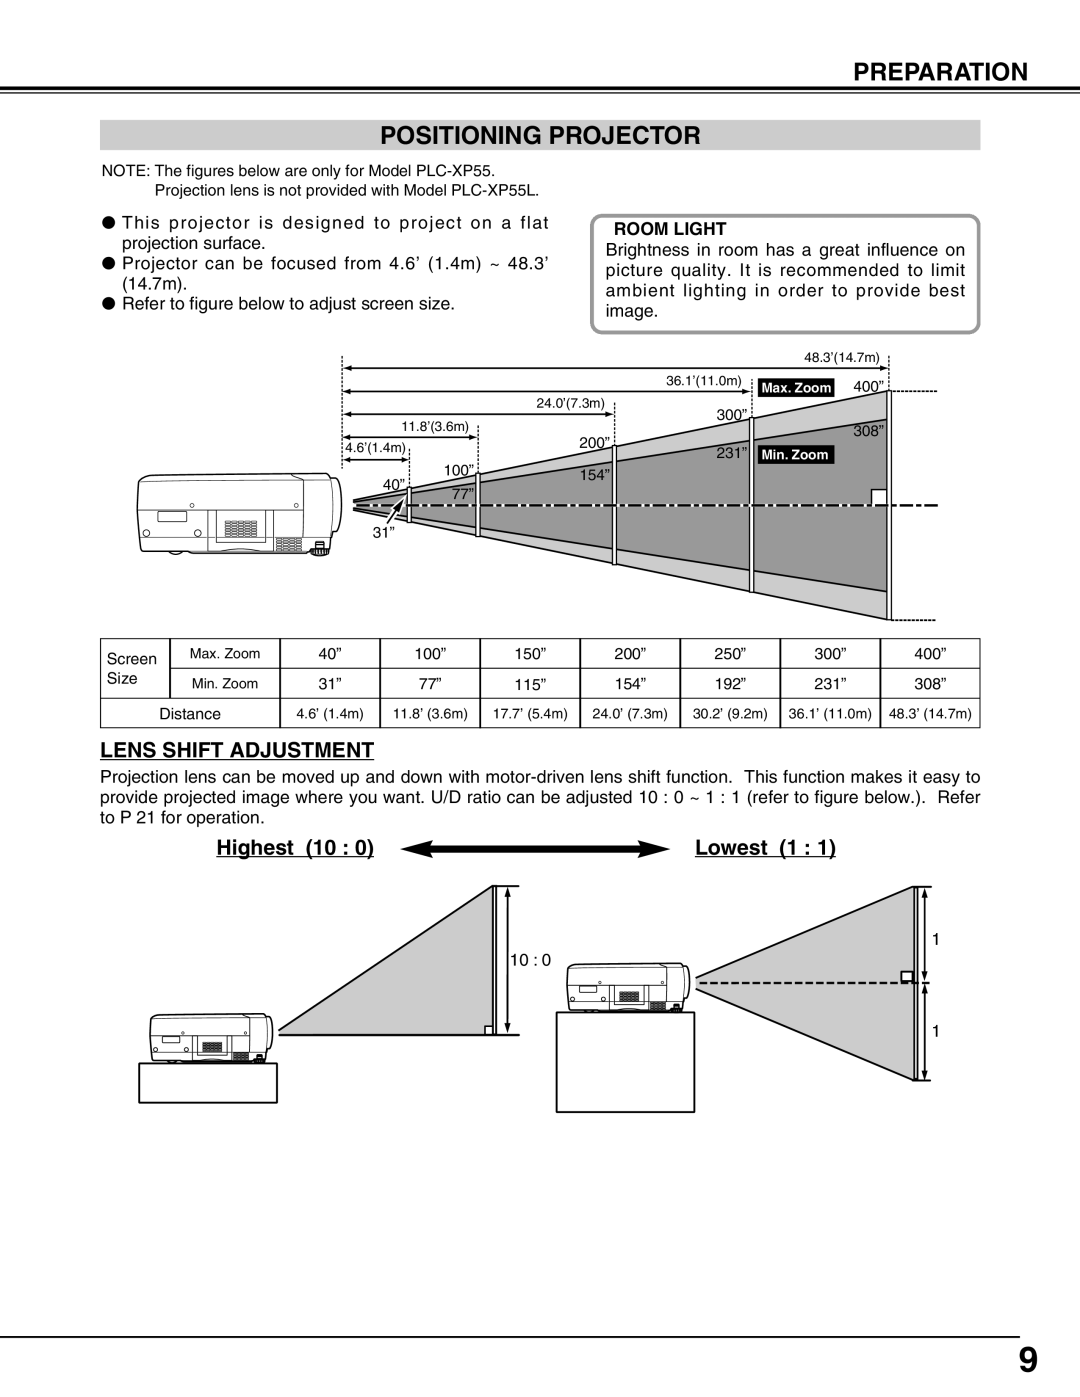 Sanyo PLC-XP55L owner manual Preparation Positioning Projector, Lens Shift Adjustment, Highest, Lowest 